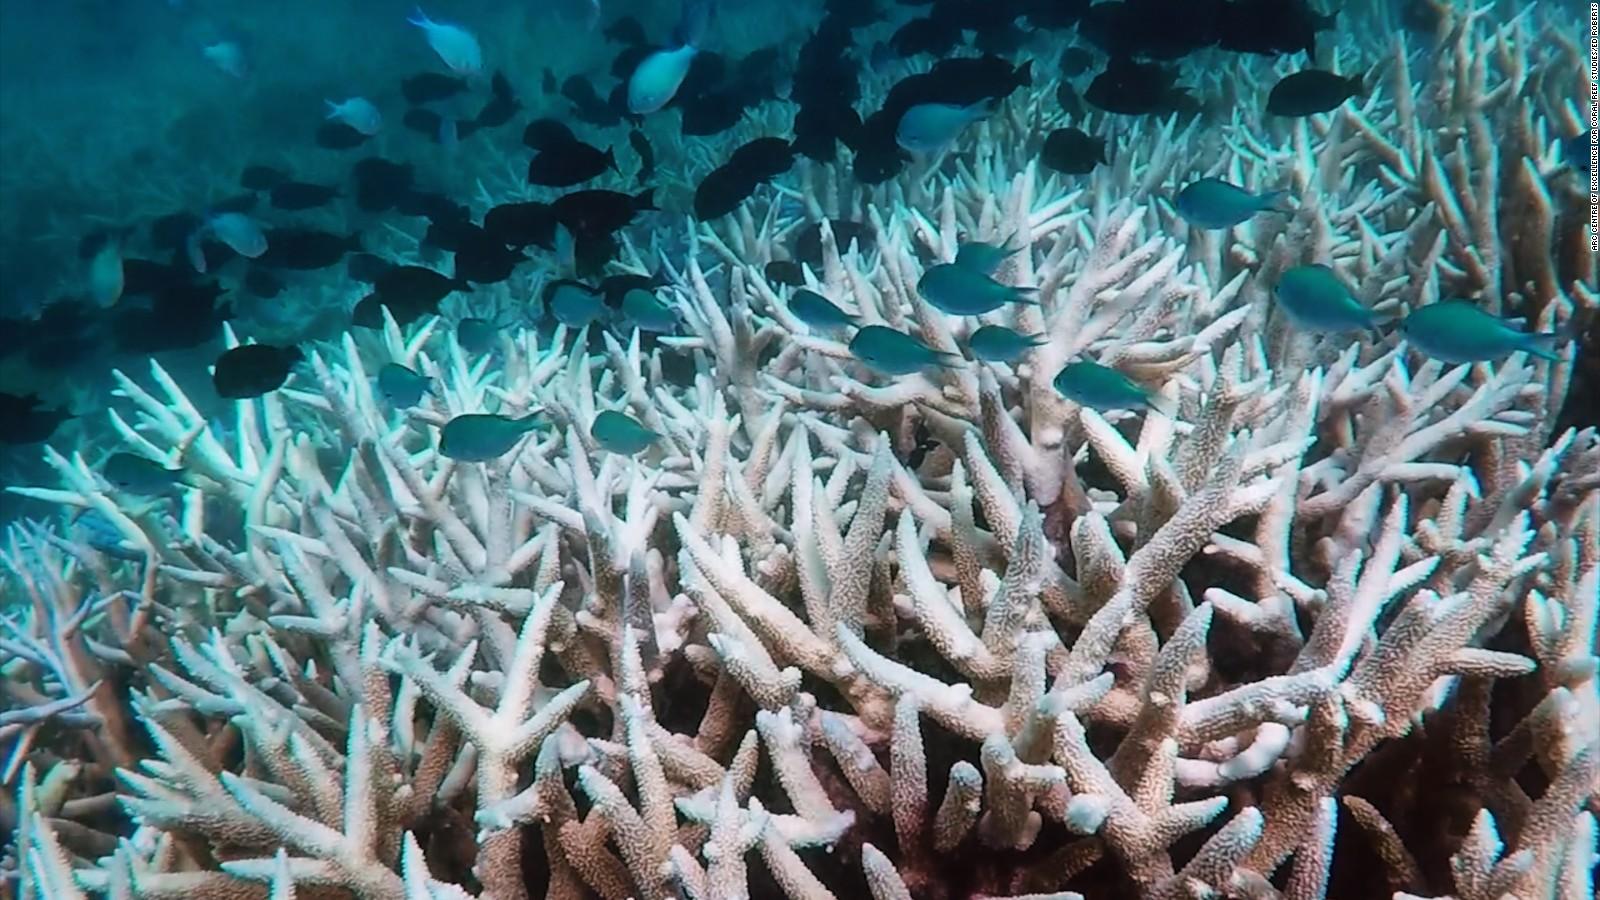 Australia: Great Barrier Reef suffering 'unprecedented' damage